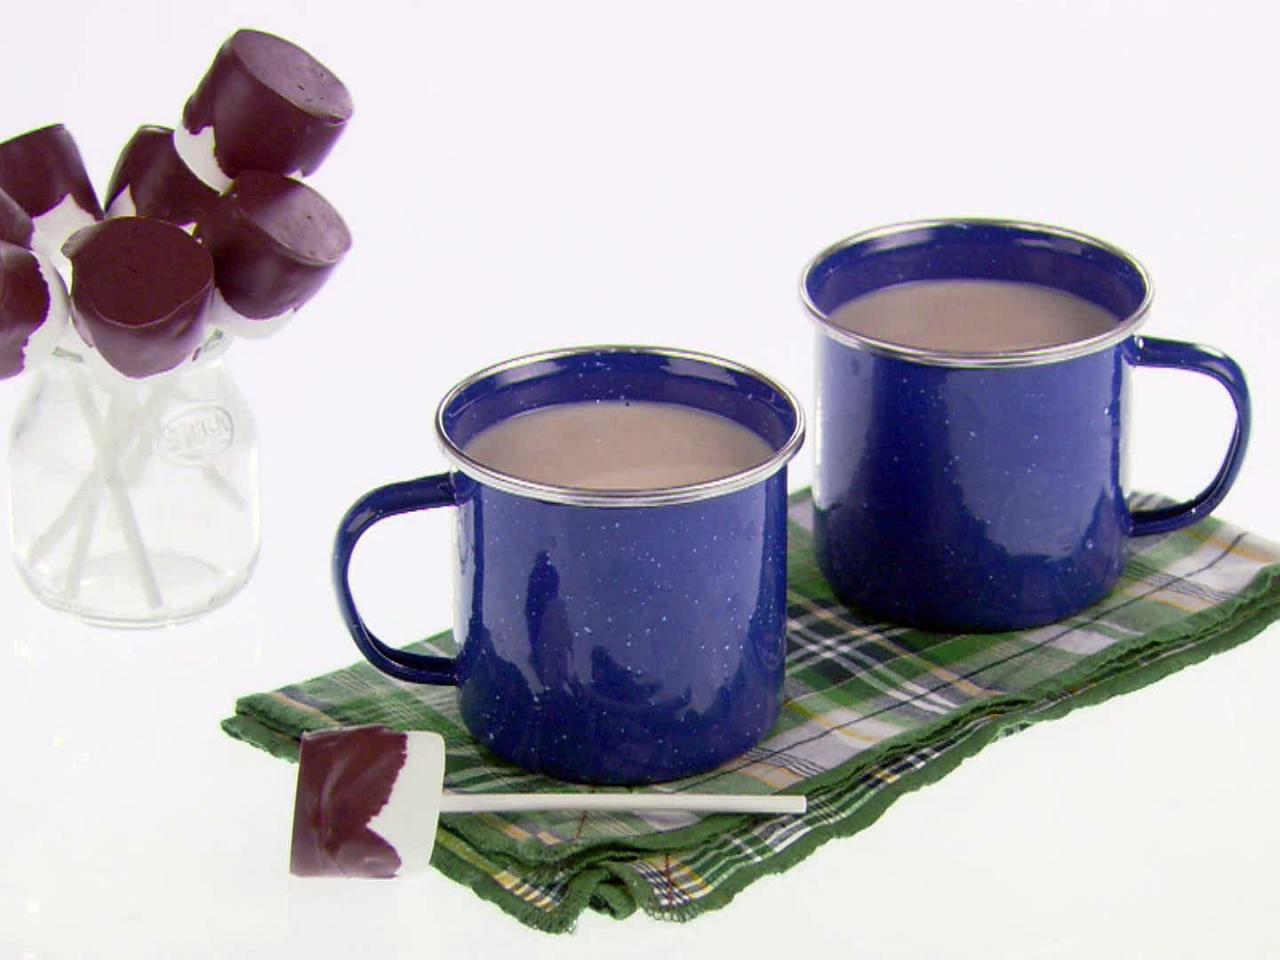 Raspberry White Chocolate Hot Chocolate Stirrers - Cookidoo® – the